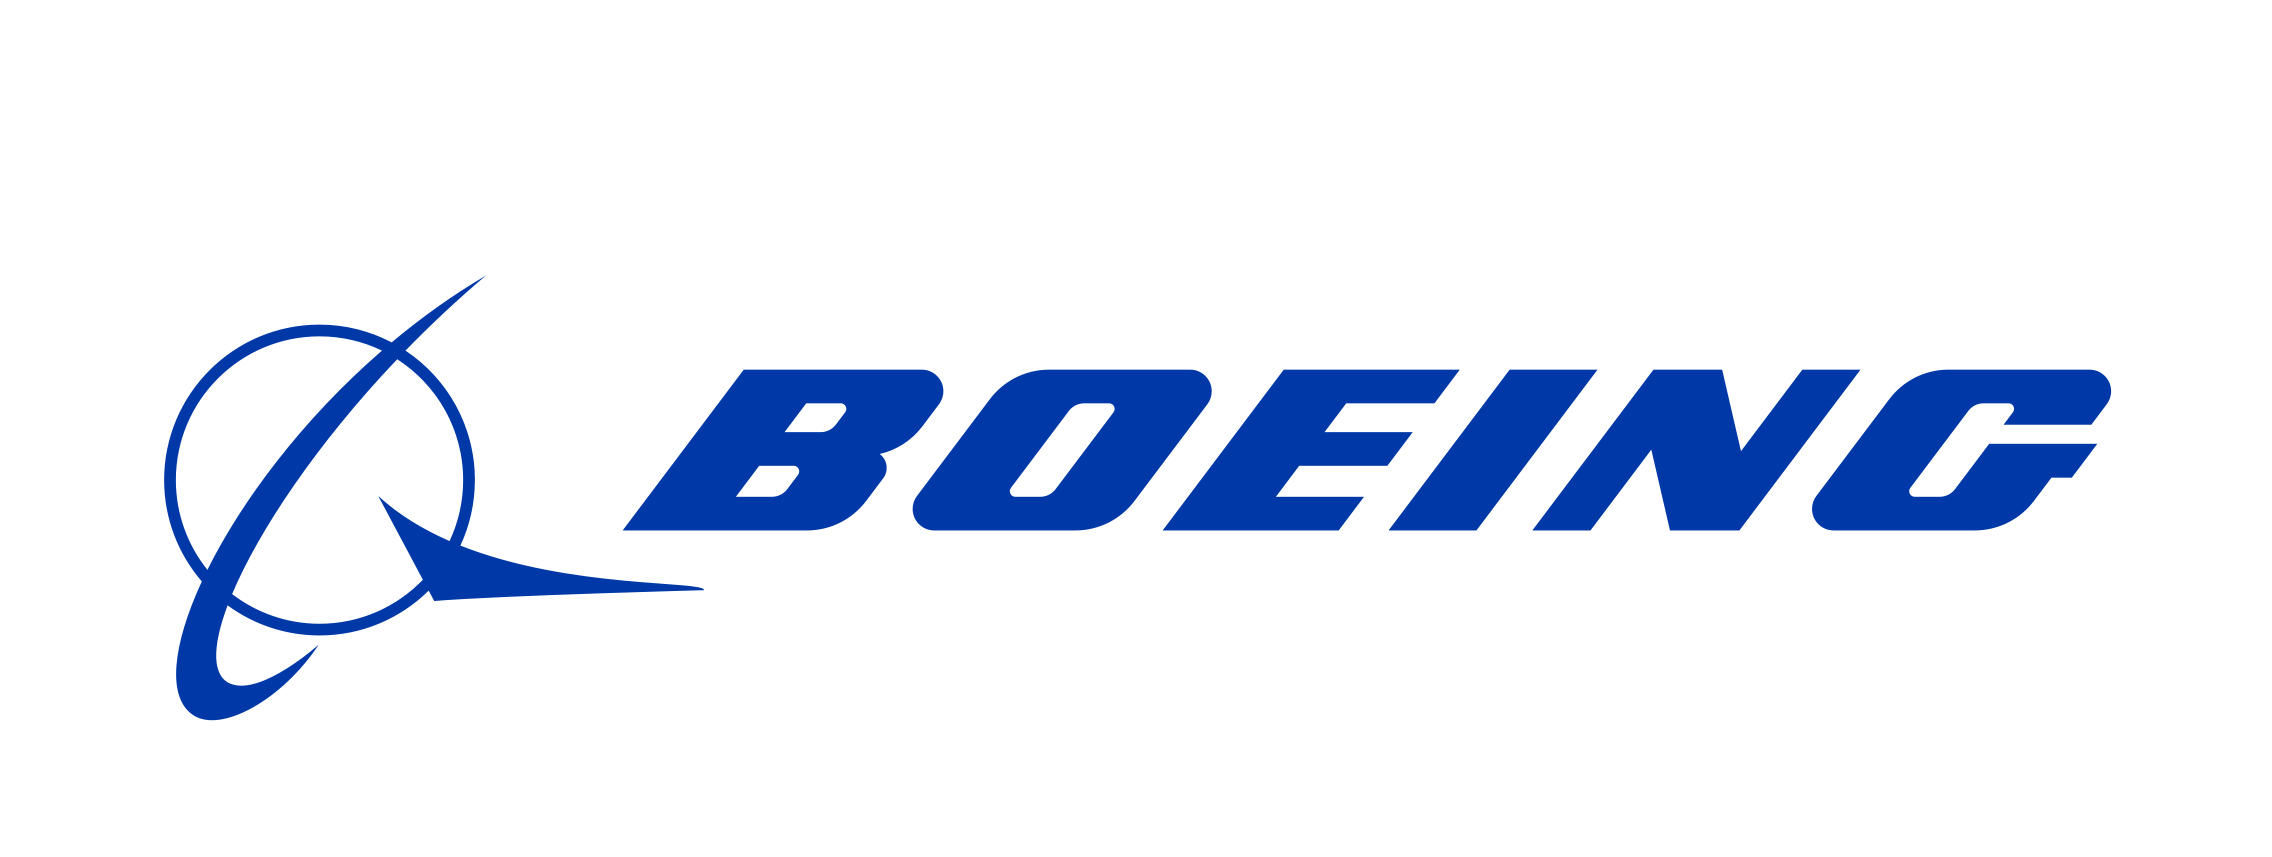 Boeing new logo